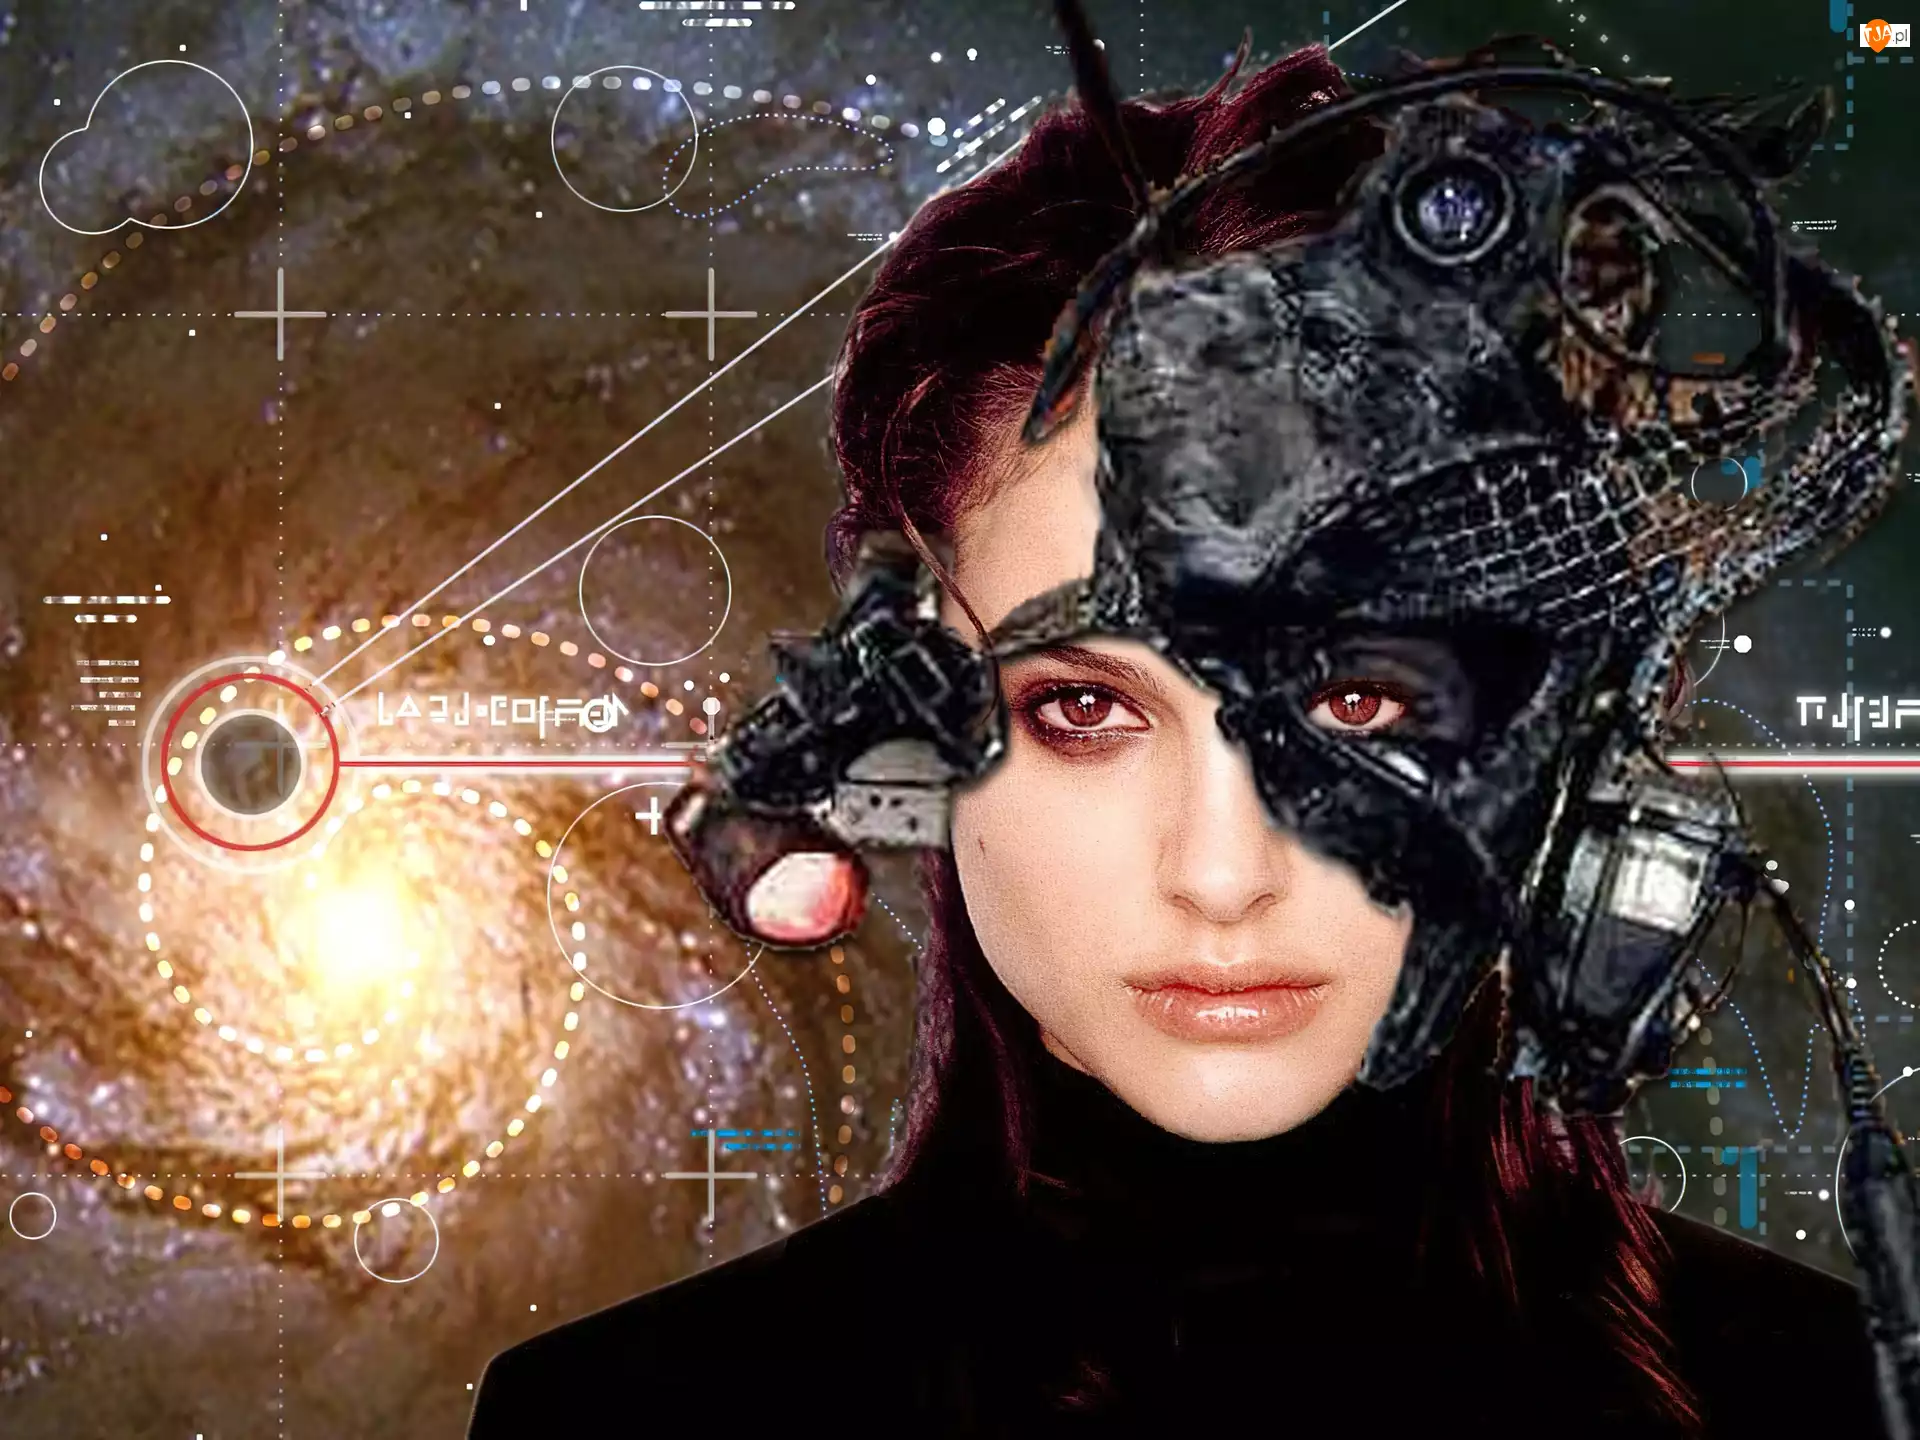 Natalie Portman, cyborg